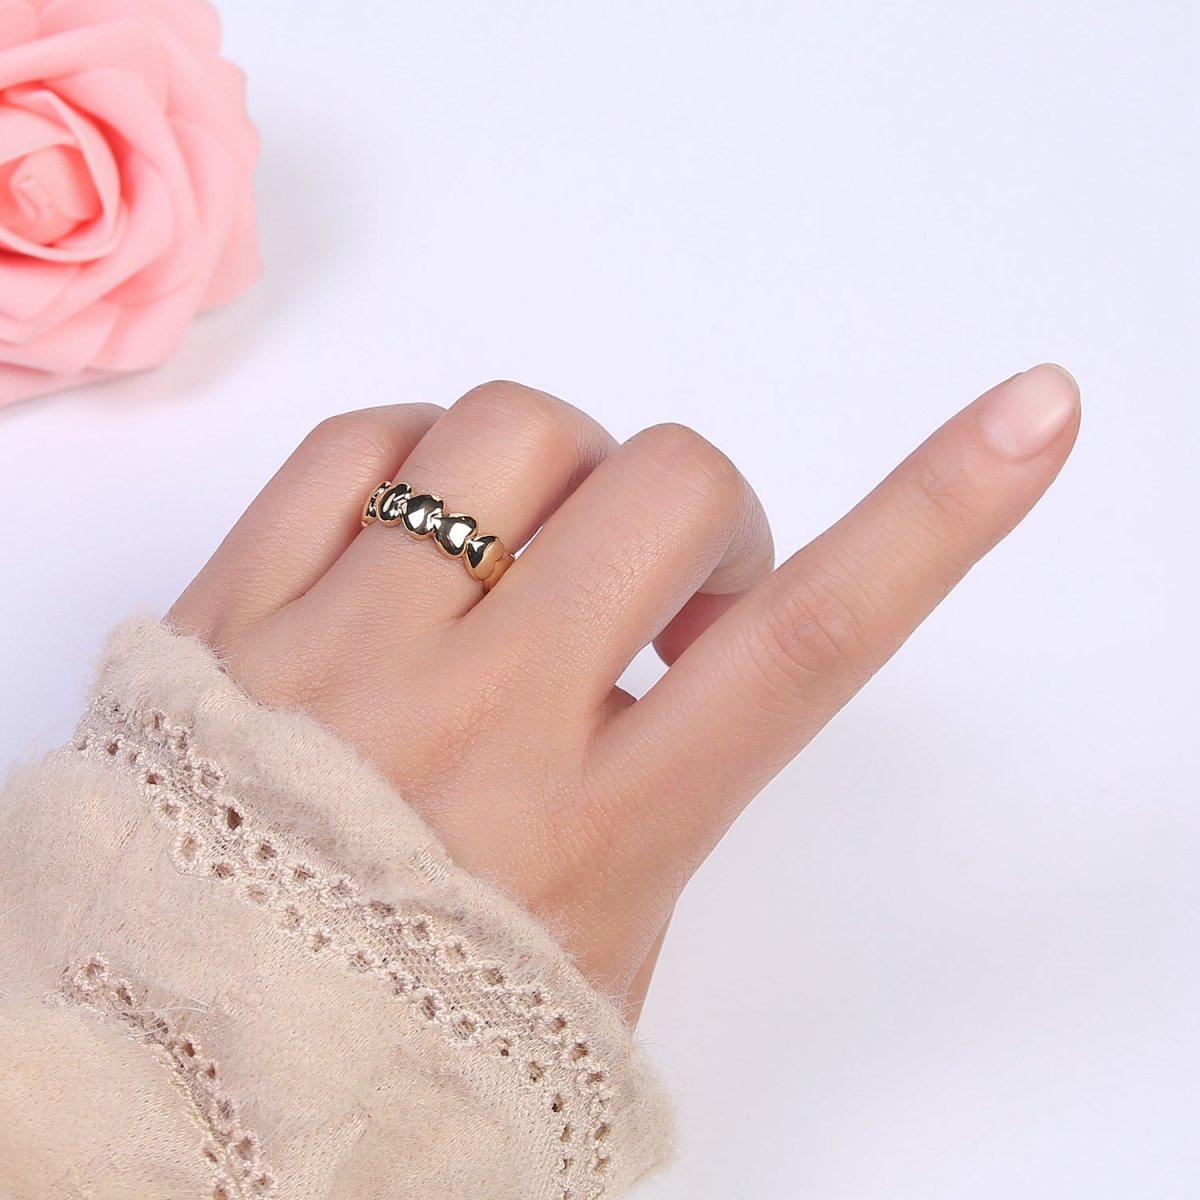 24K Gold Filled Heart Adjustable Ring, Multi Heart Love Friendship Ring For Valentine's U-532 - DLUXCA